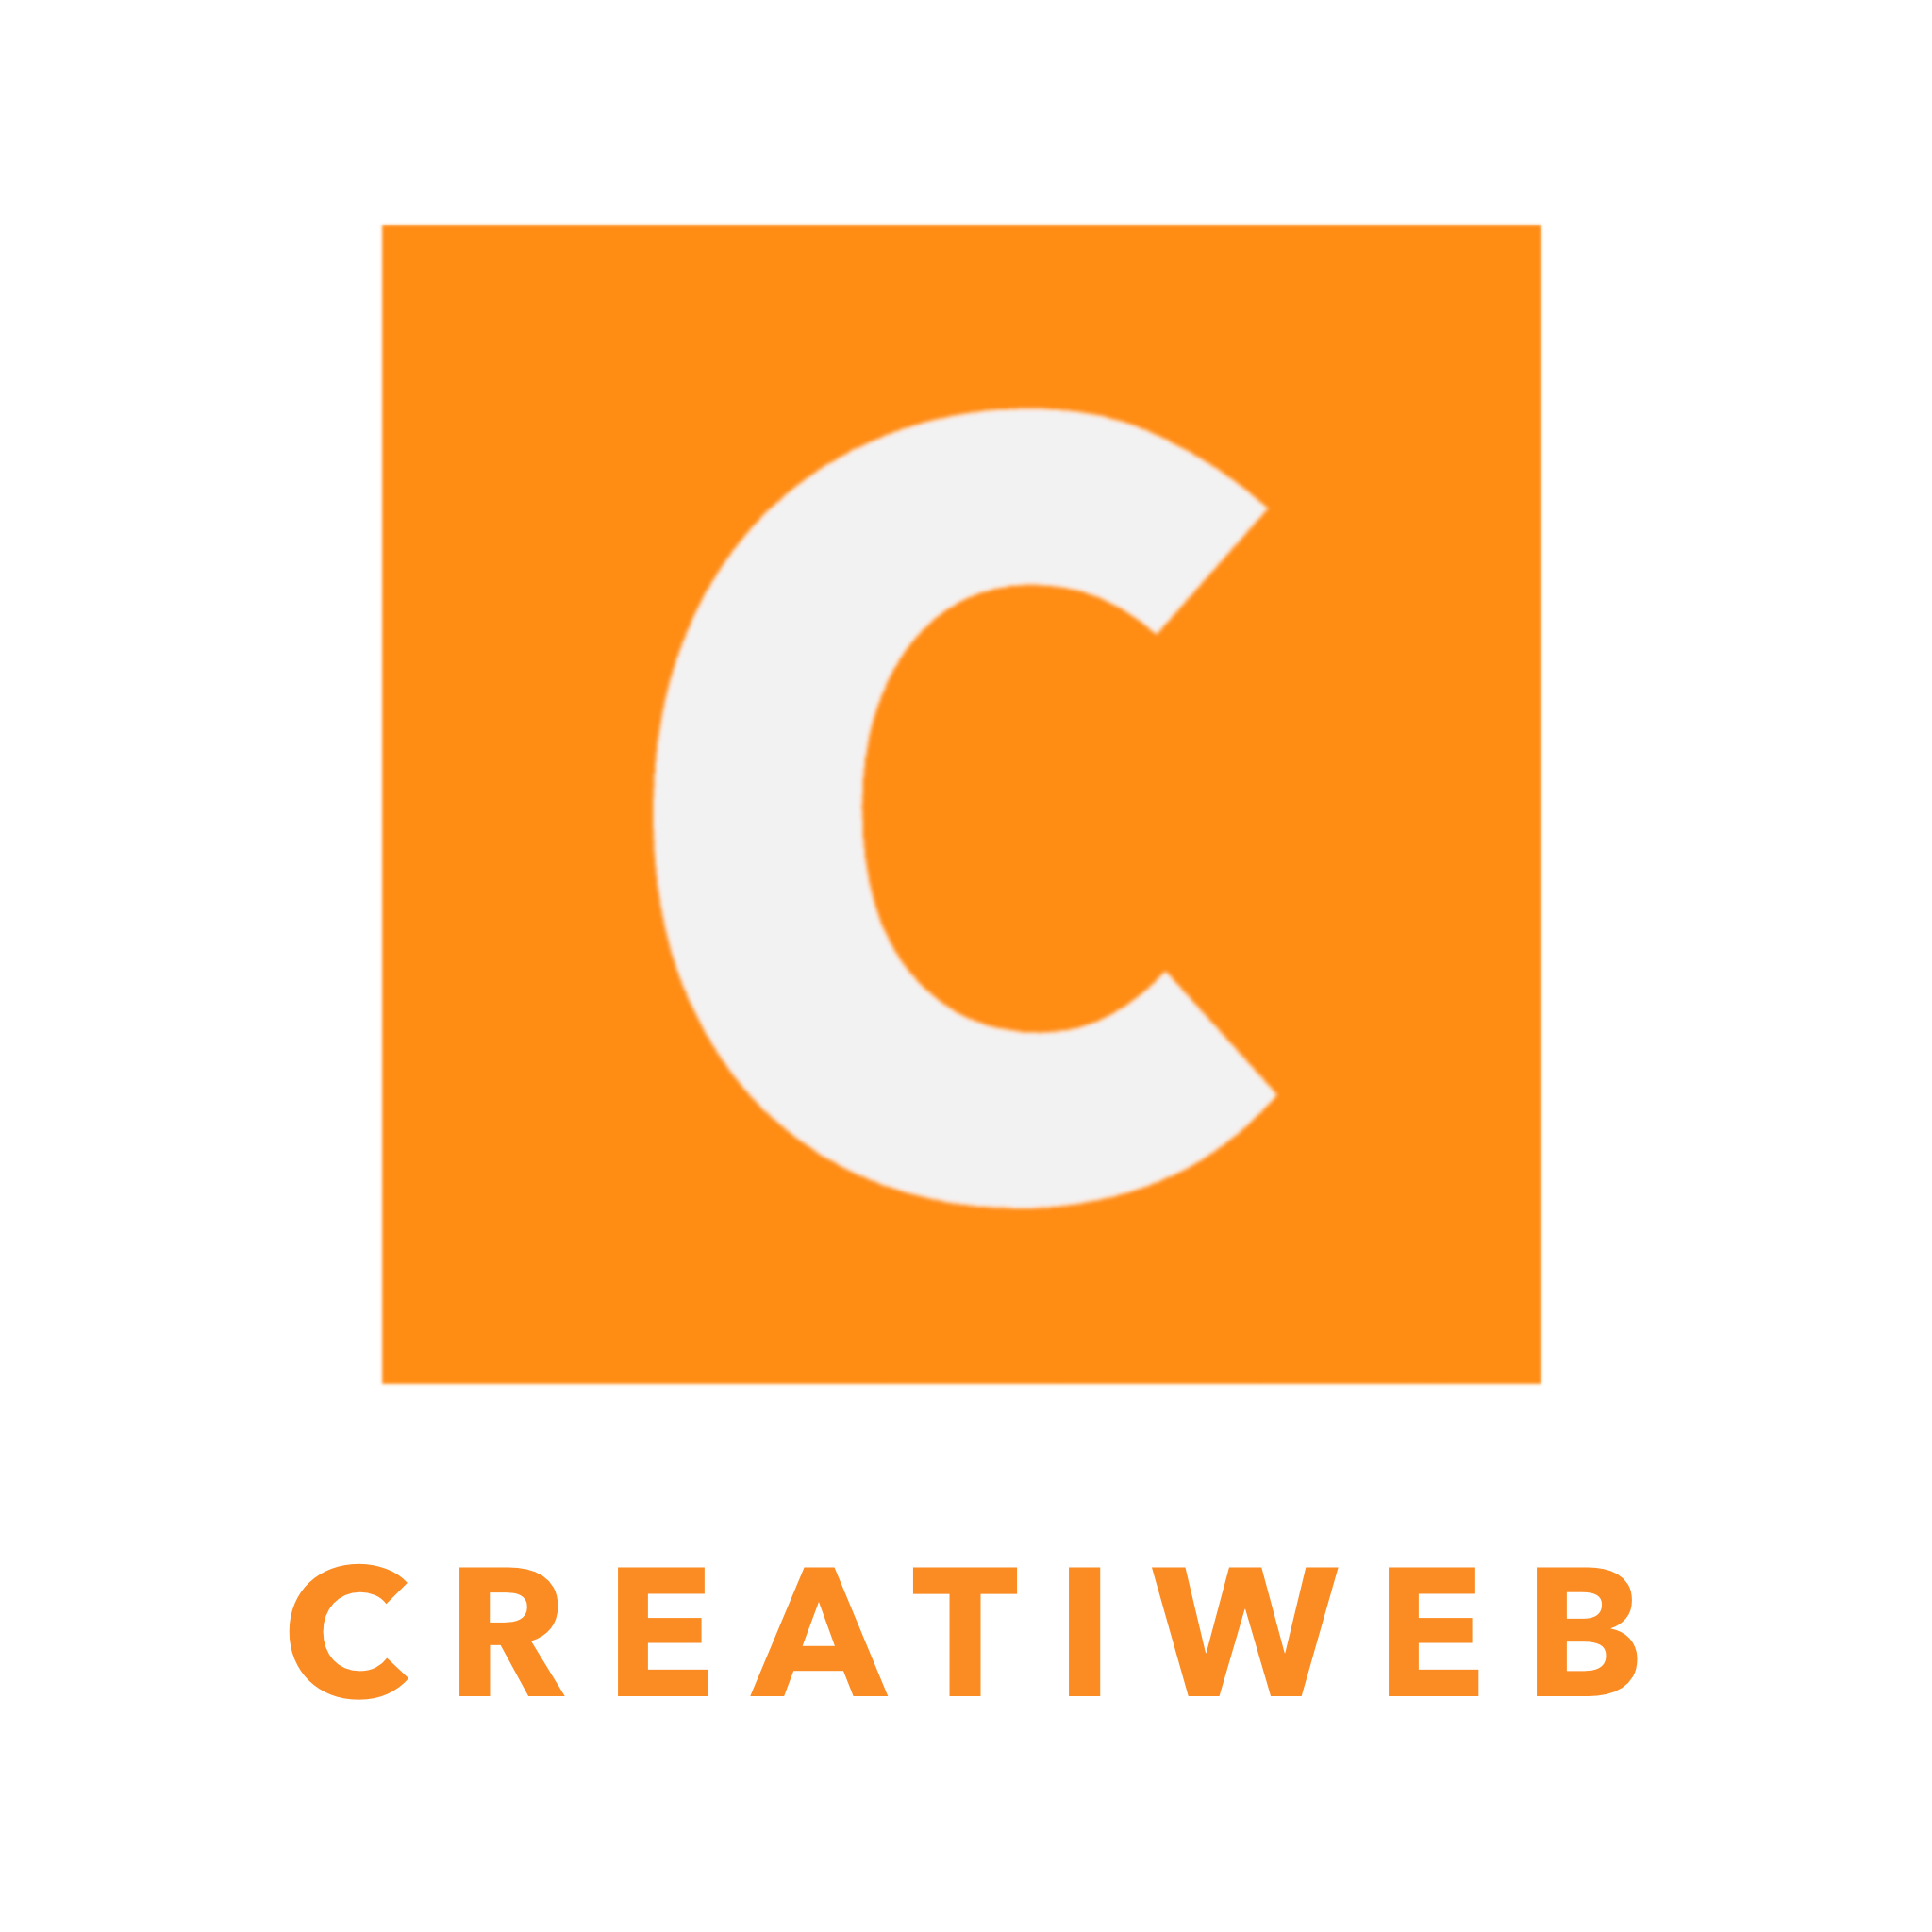 CREATIWEB studio